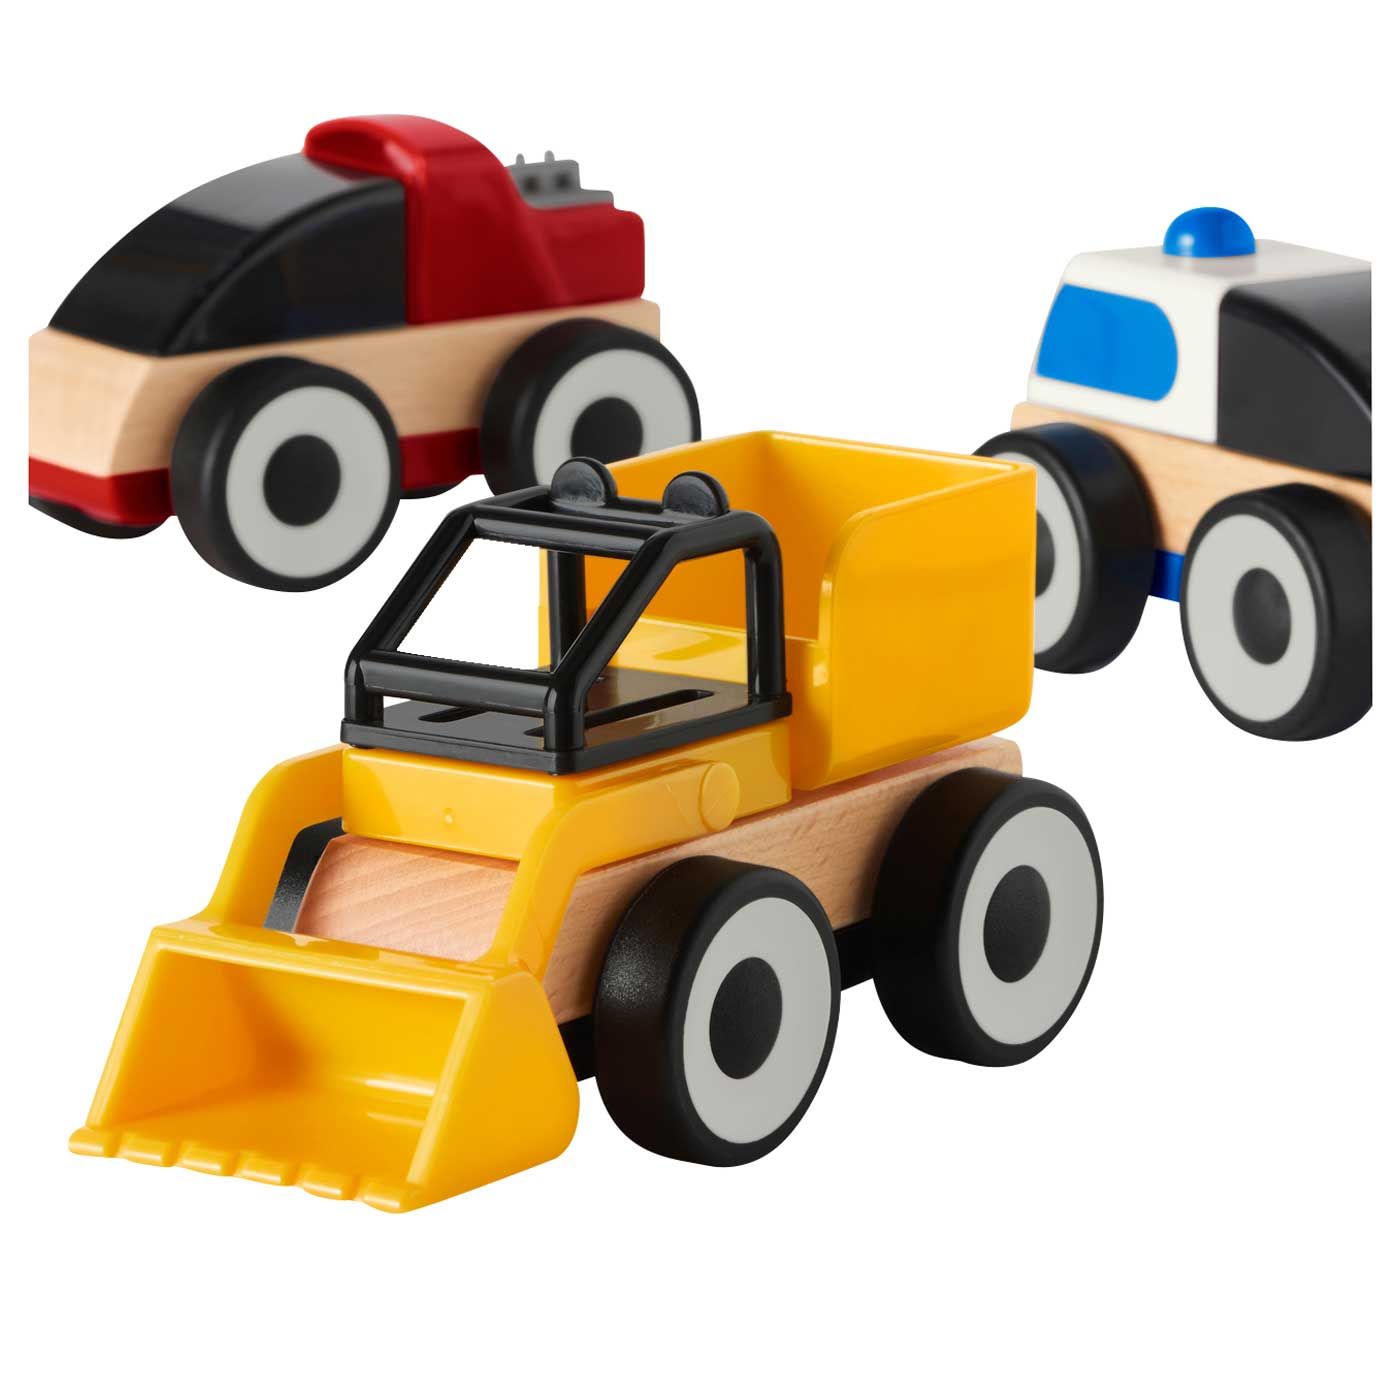 IKEA Lillabo Toy Vehicle - 2